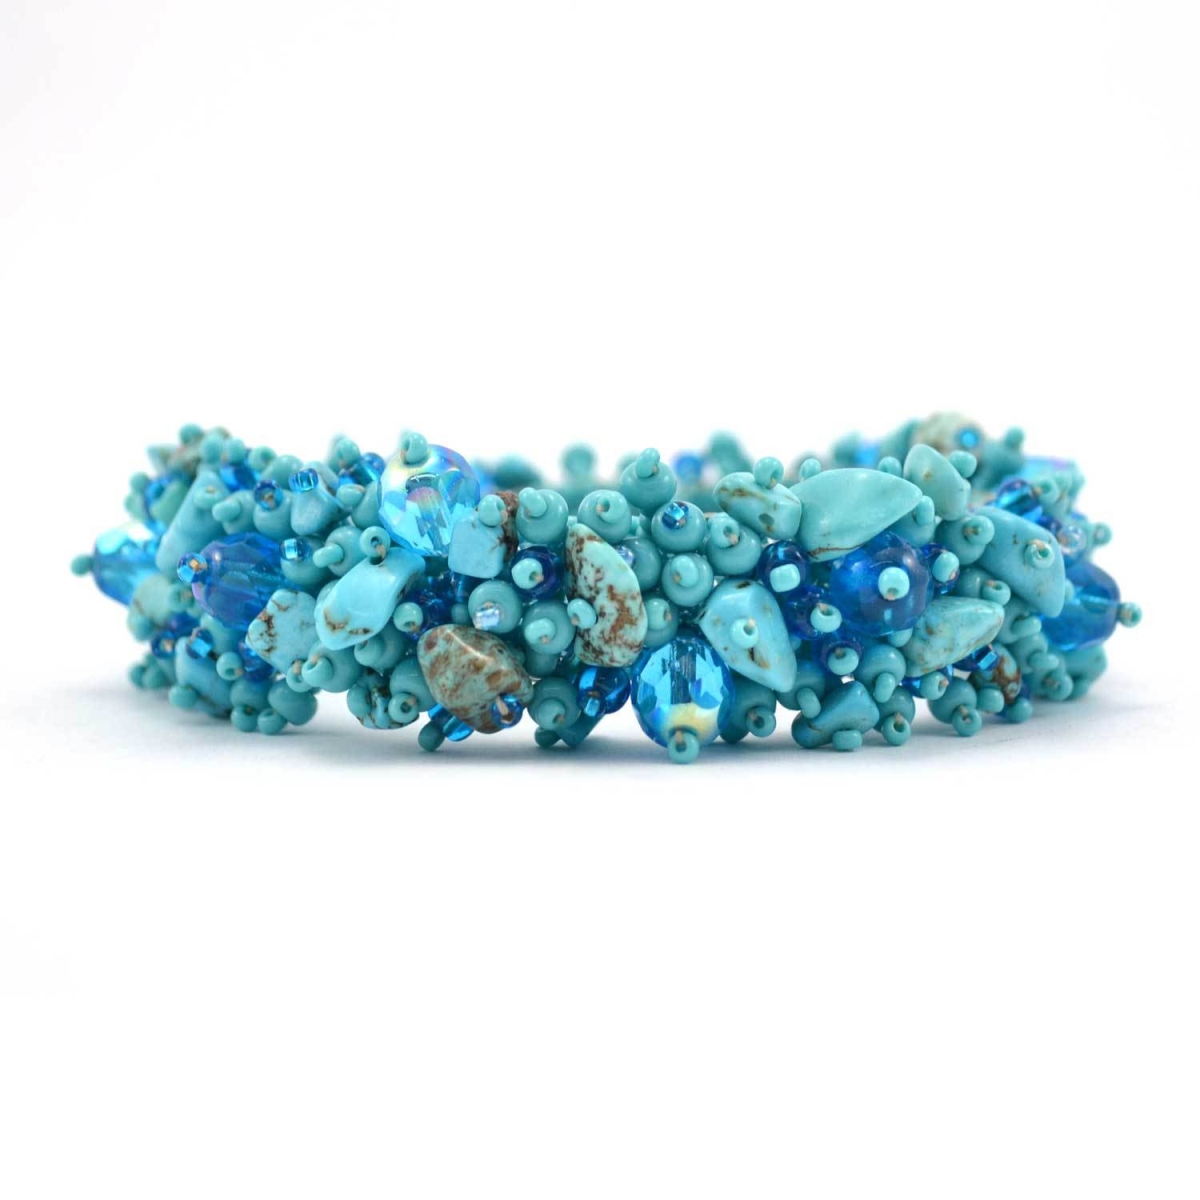 Lijbr19-13-220317 Magnetic Stone Caterpillar Bracelet, Turquoise